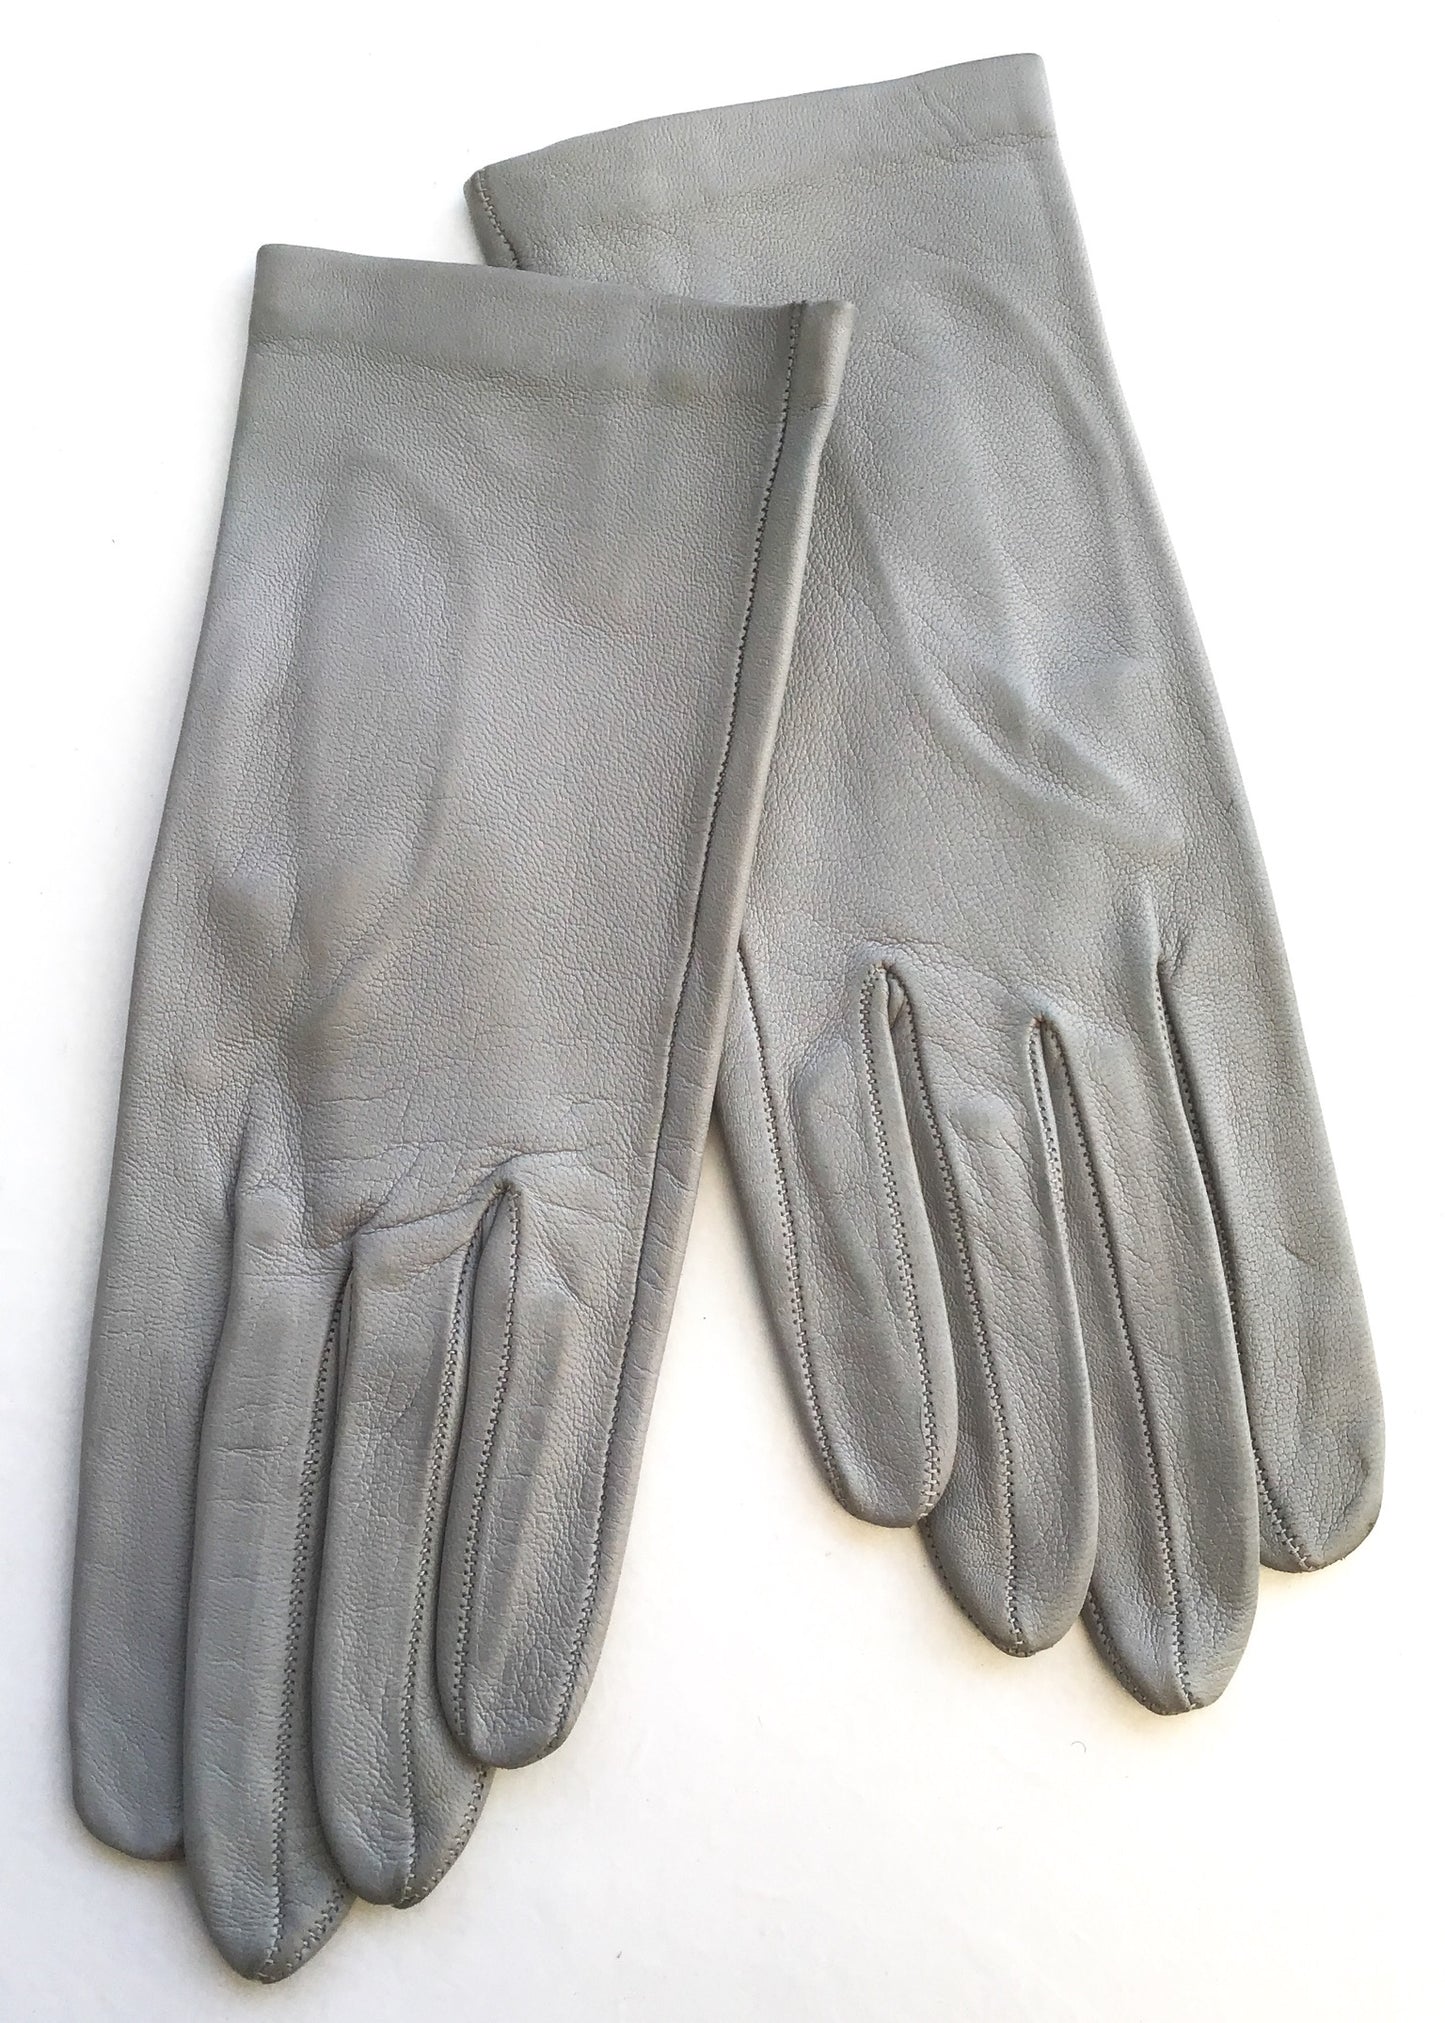 1960s Vintage Dove Grey Leather Gloves • Wrist Length Gloves • Size 7